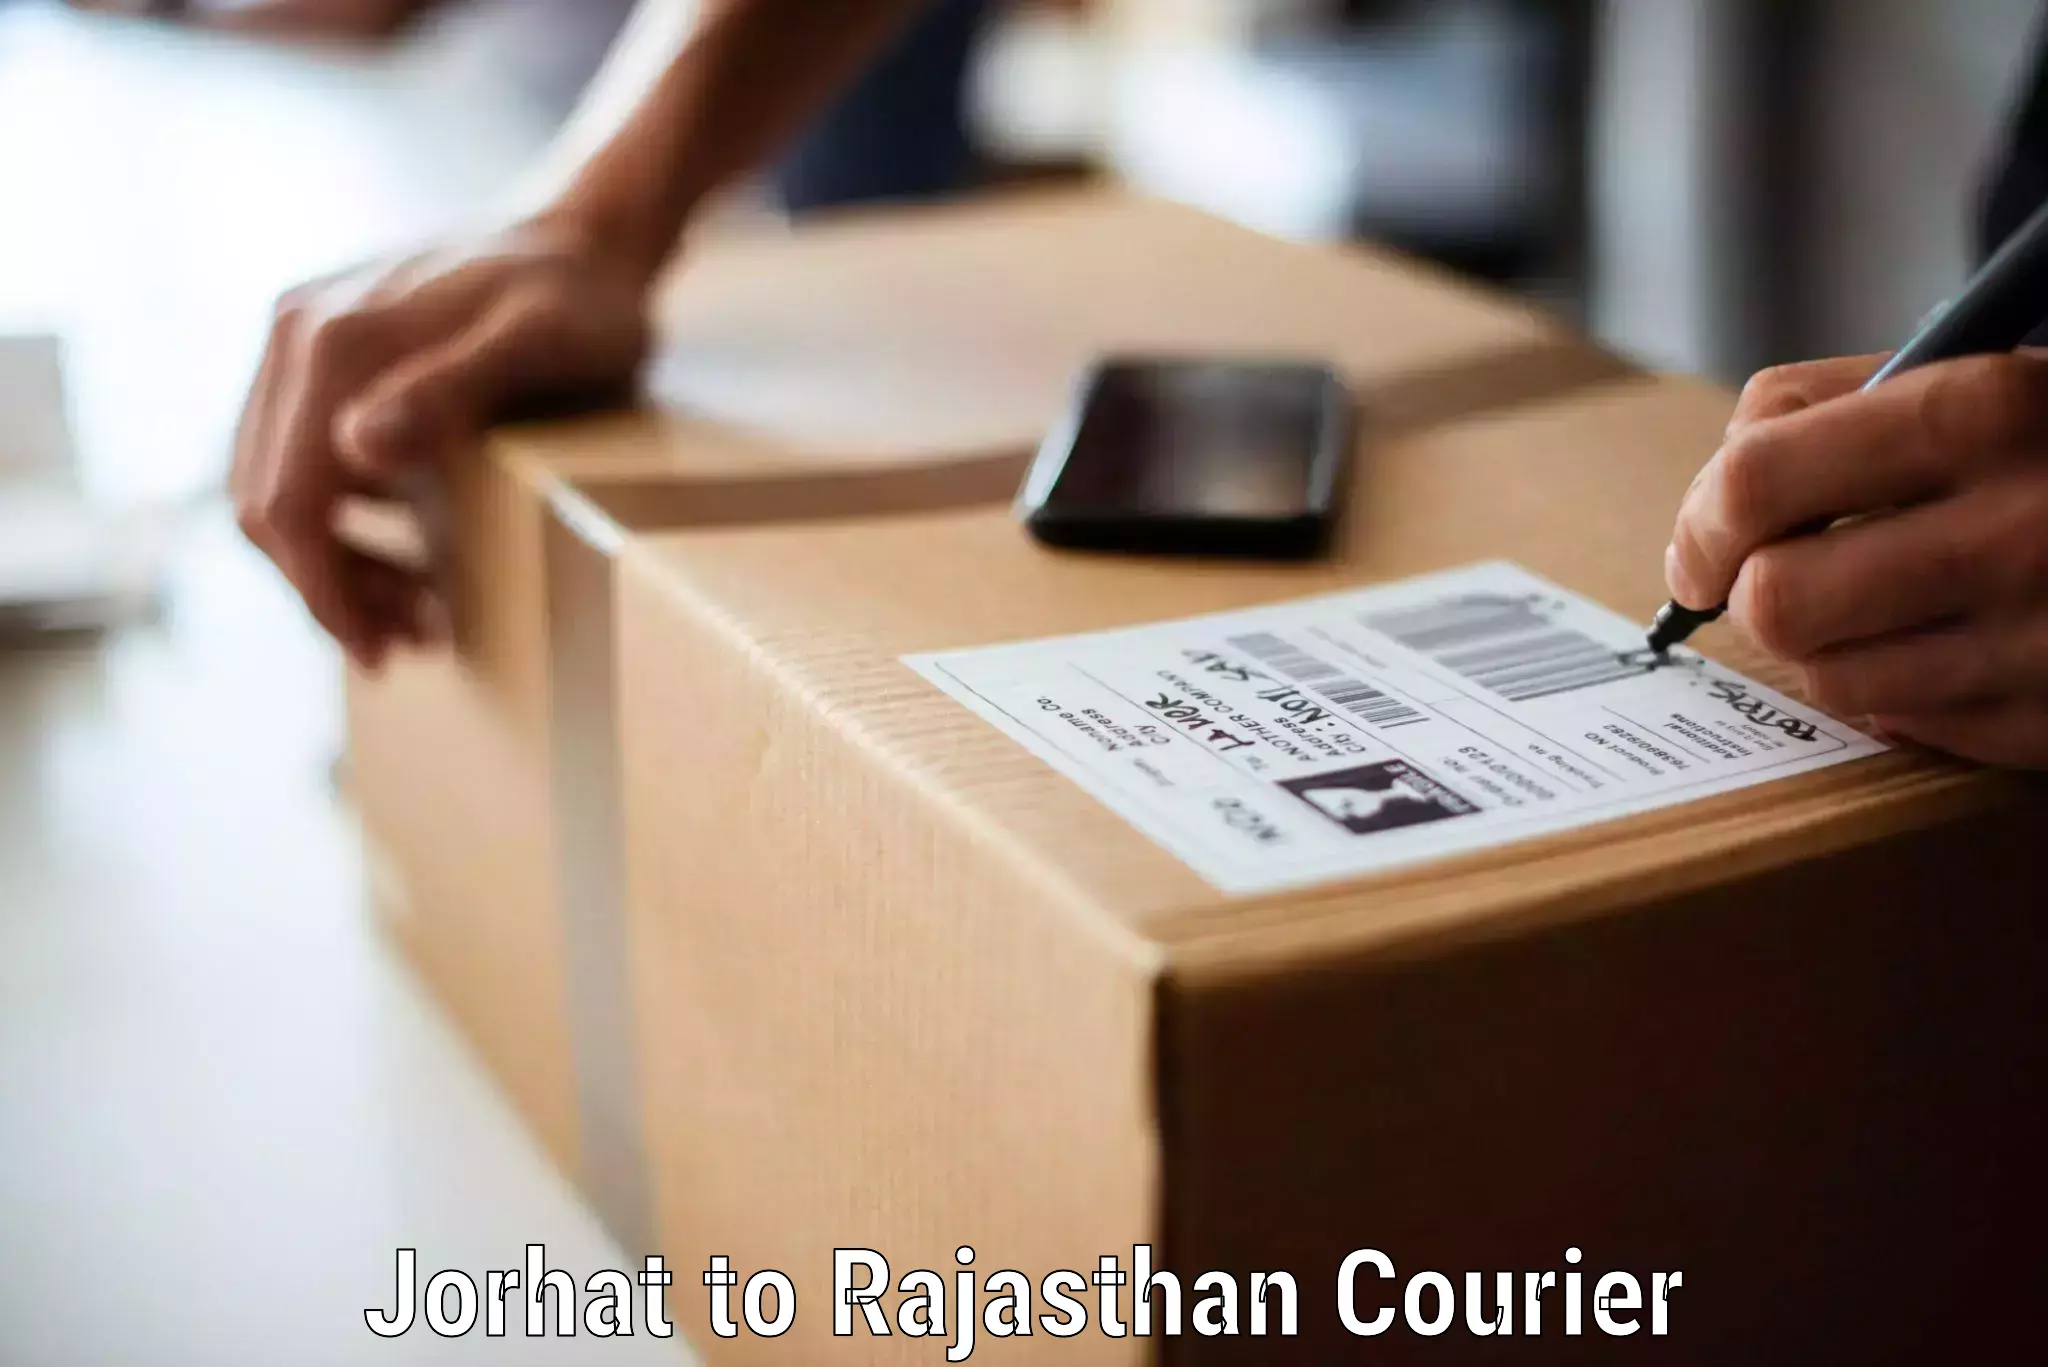 Furniture delivery service Jorhat to Hanumangarh